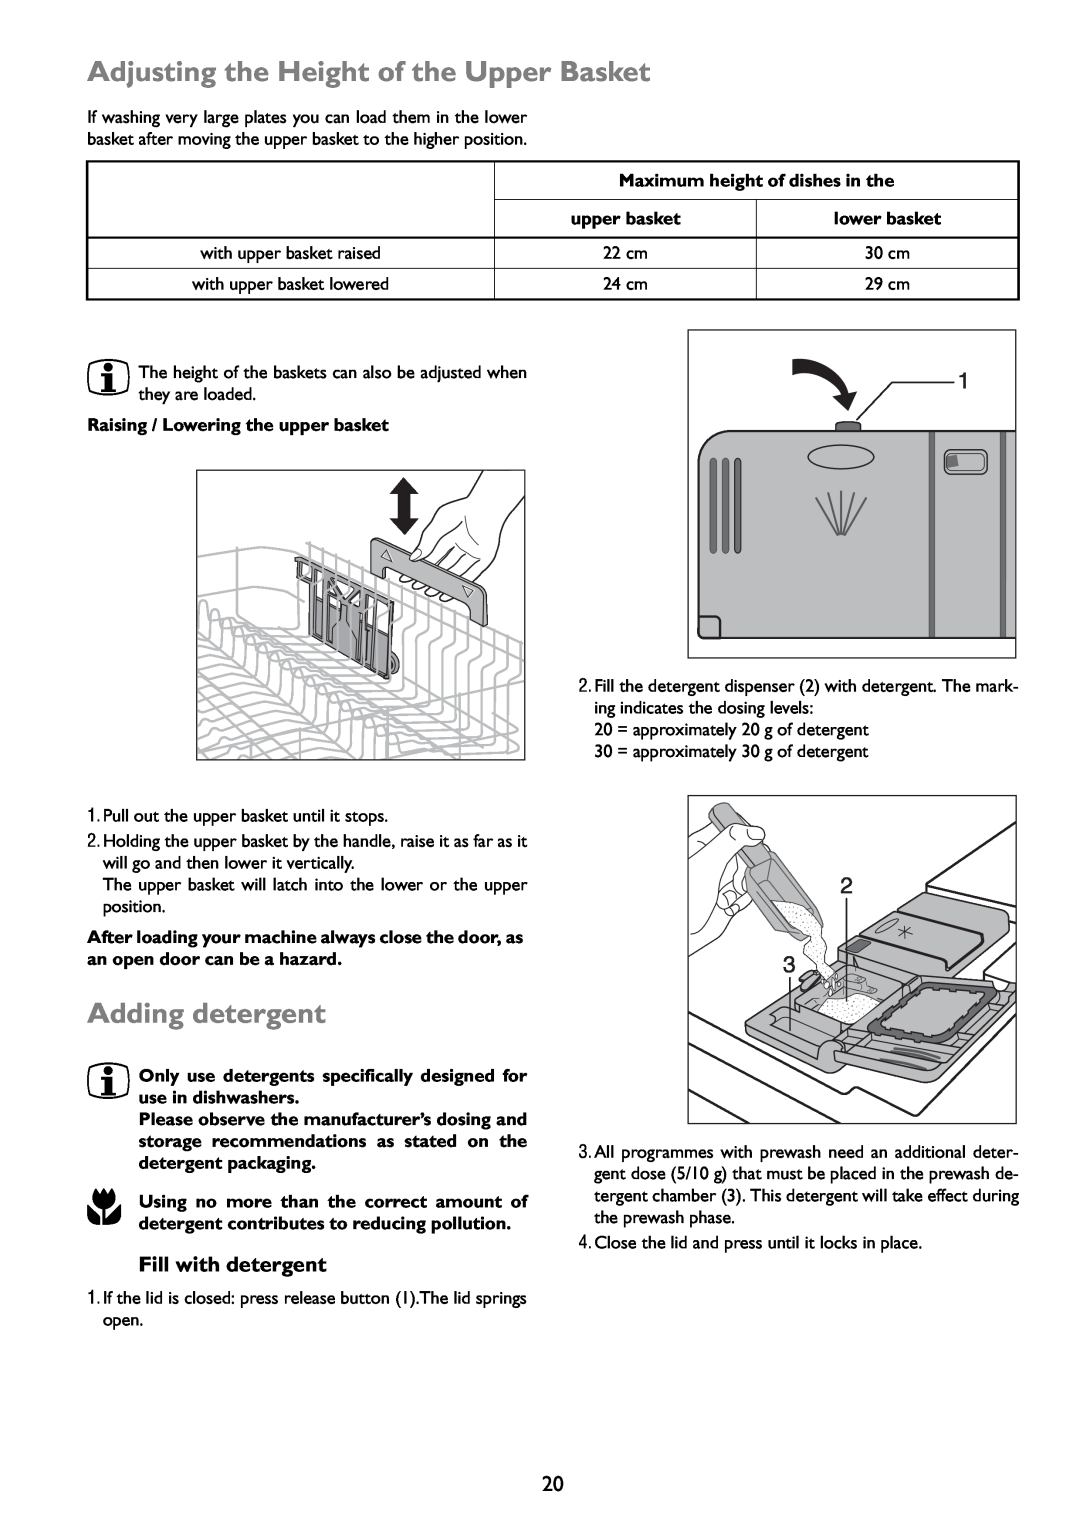 John Lewis JLDWW 1203 instruction manual Adjusting the Height of the Upper Basket, Adding detergent, Fill with detergent 